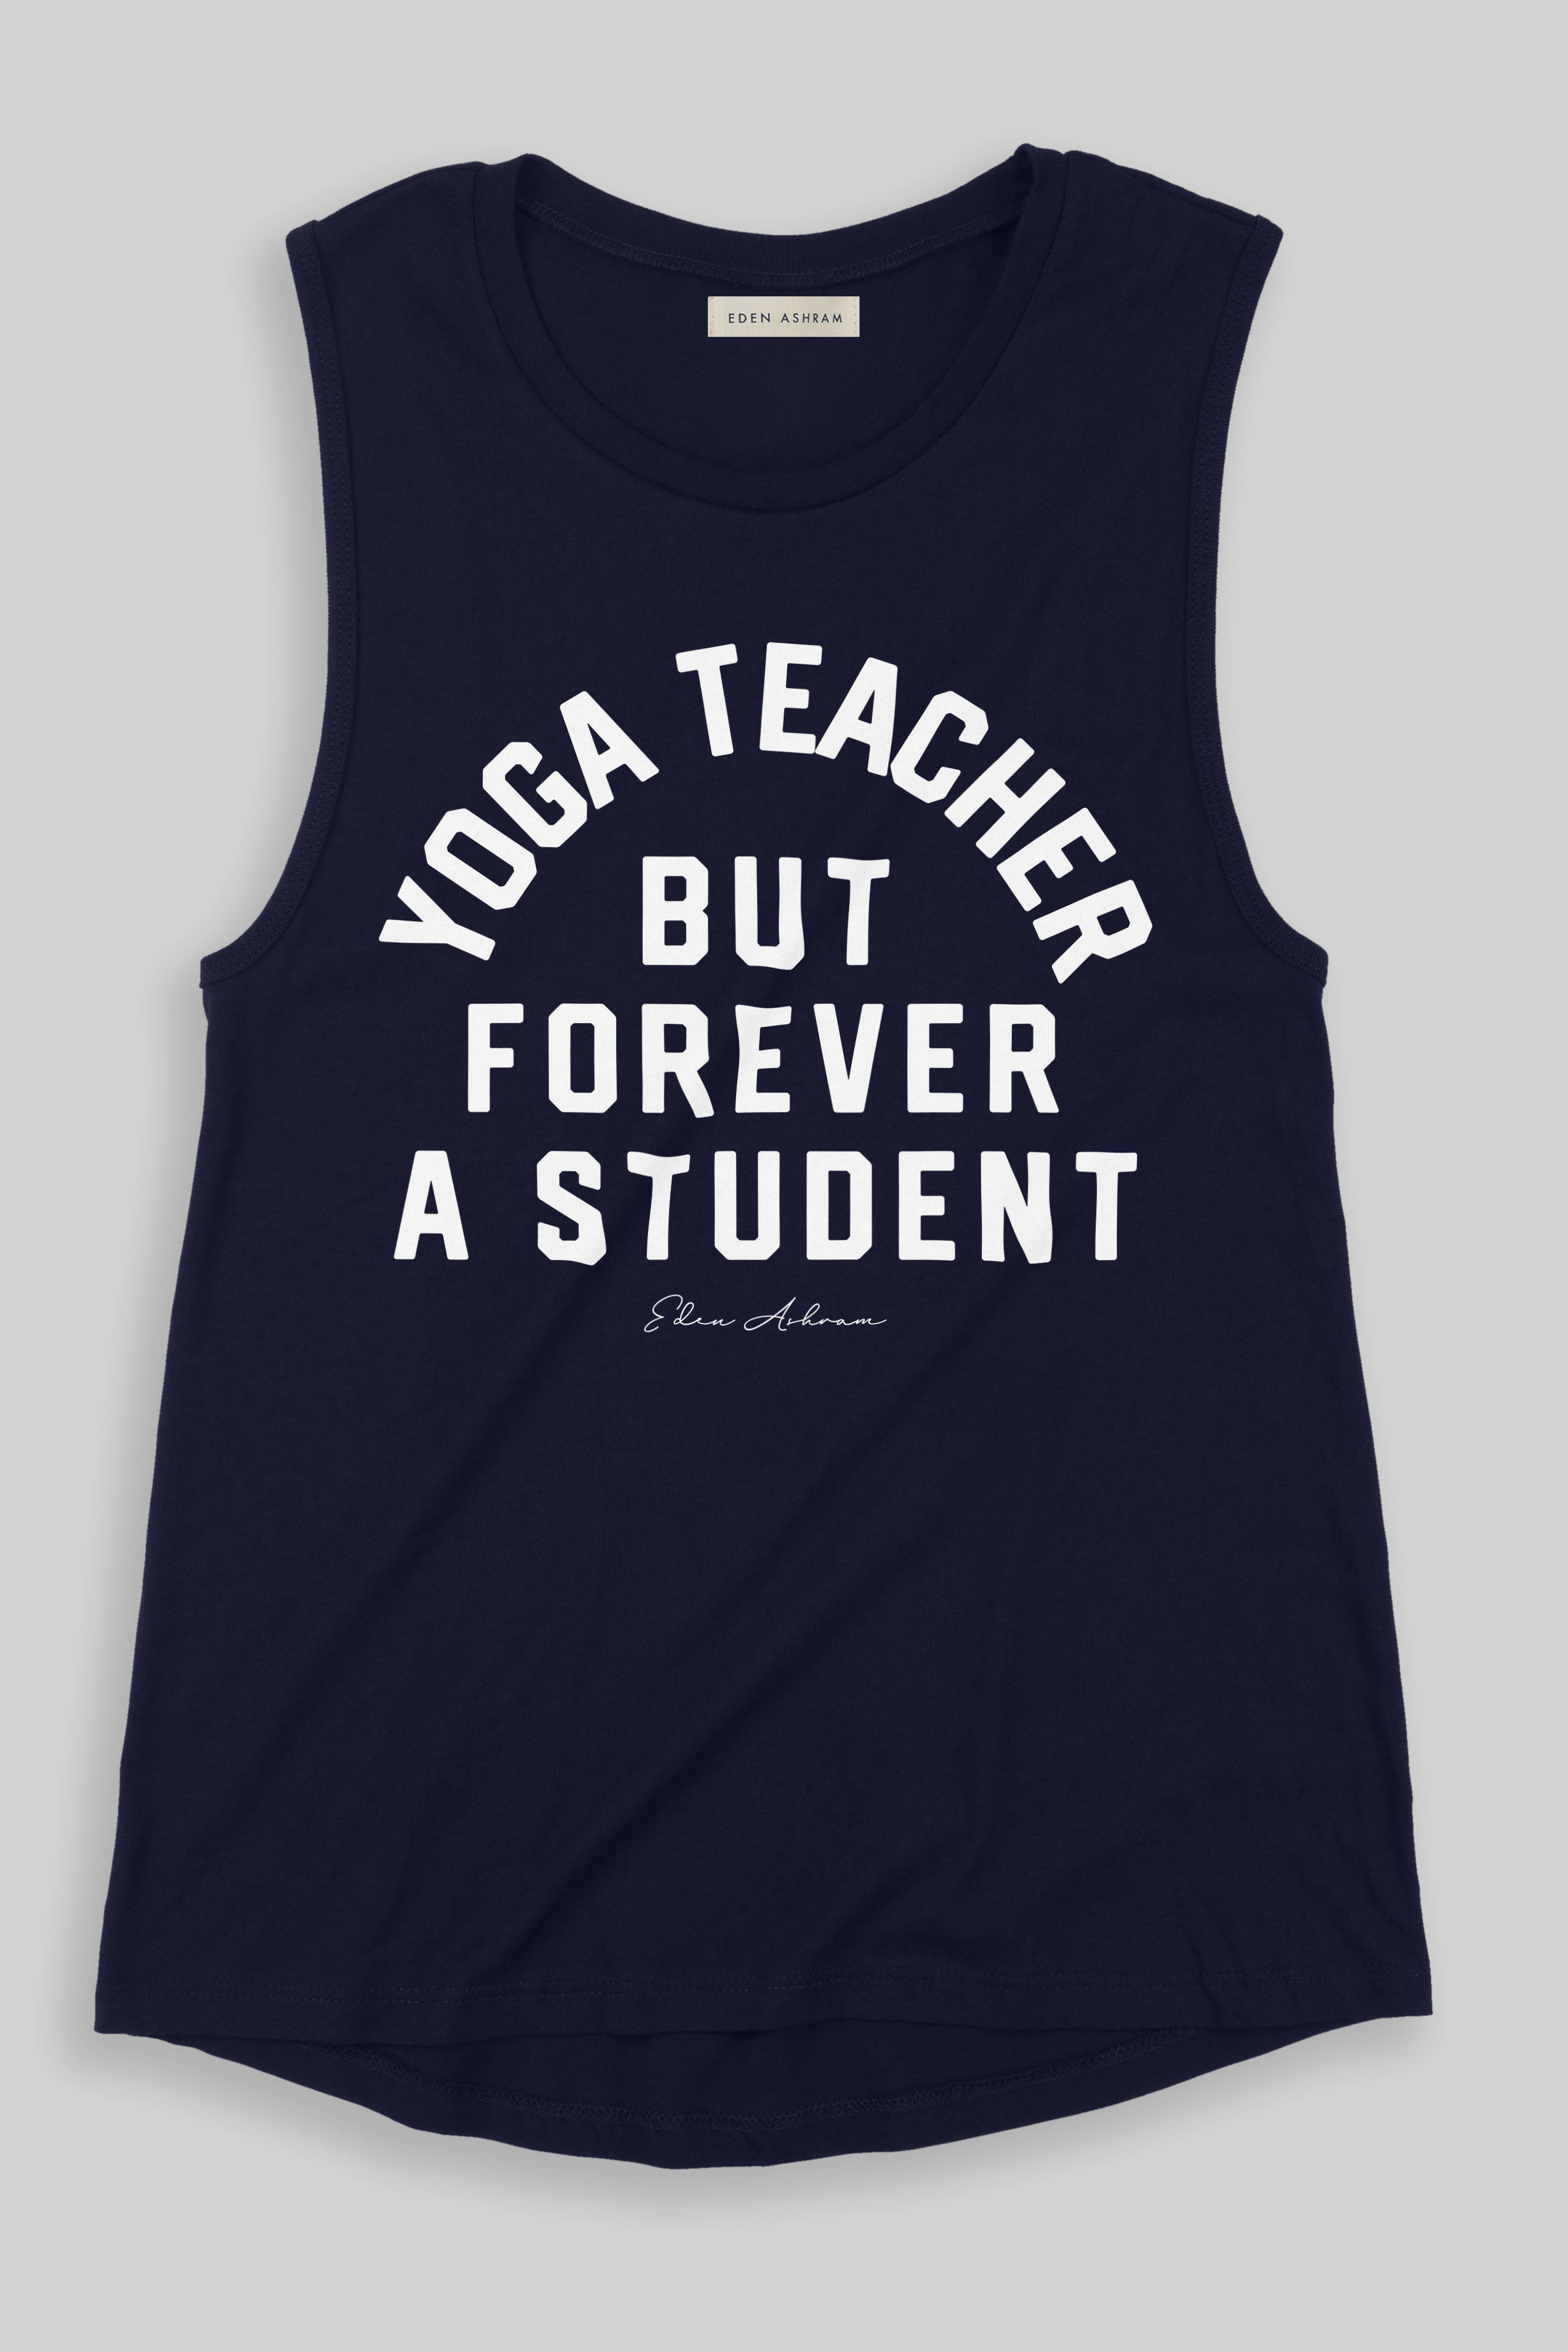 EDEN ASHRAM Yoga Teacher But Forever A Student Jersey Muscle Tank Navy